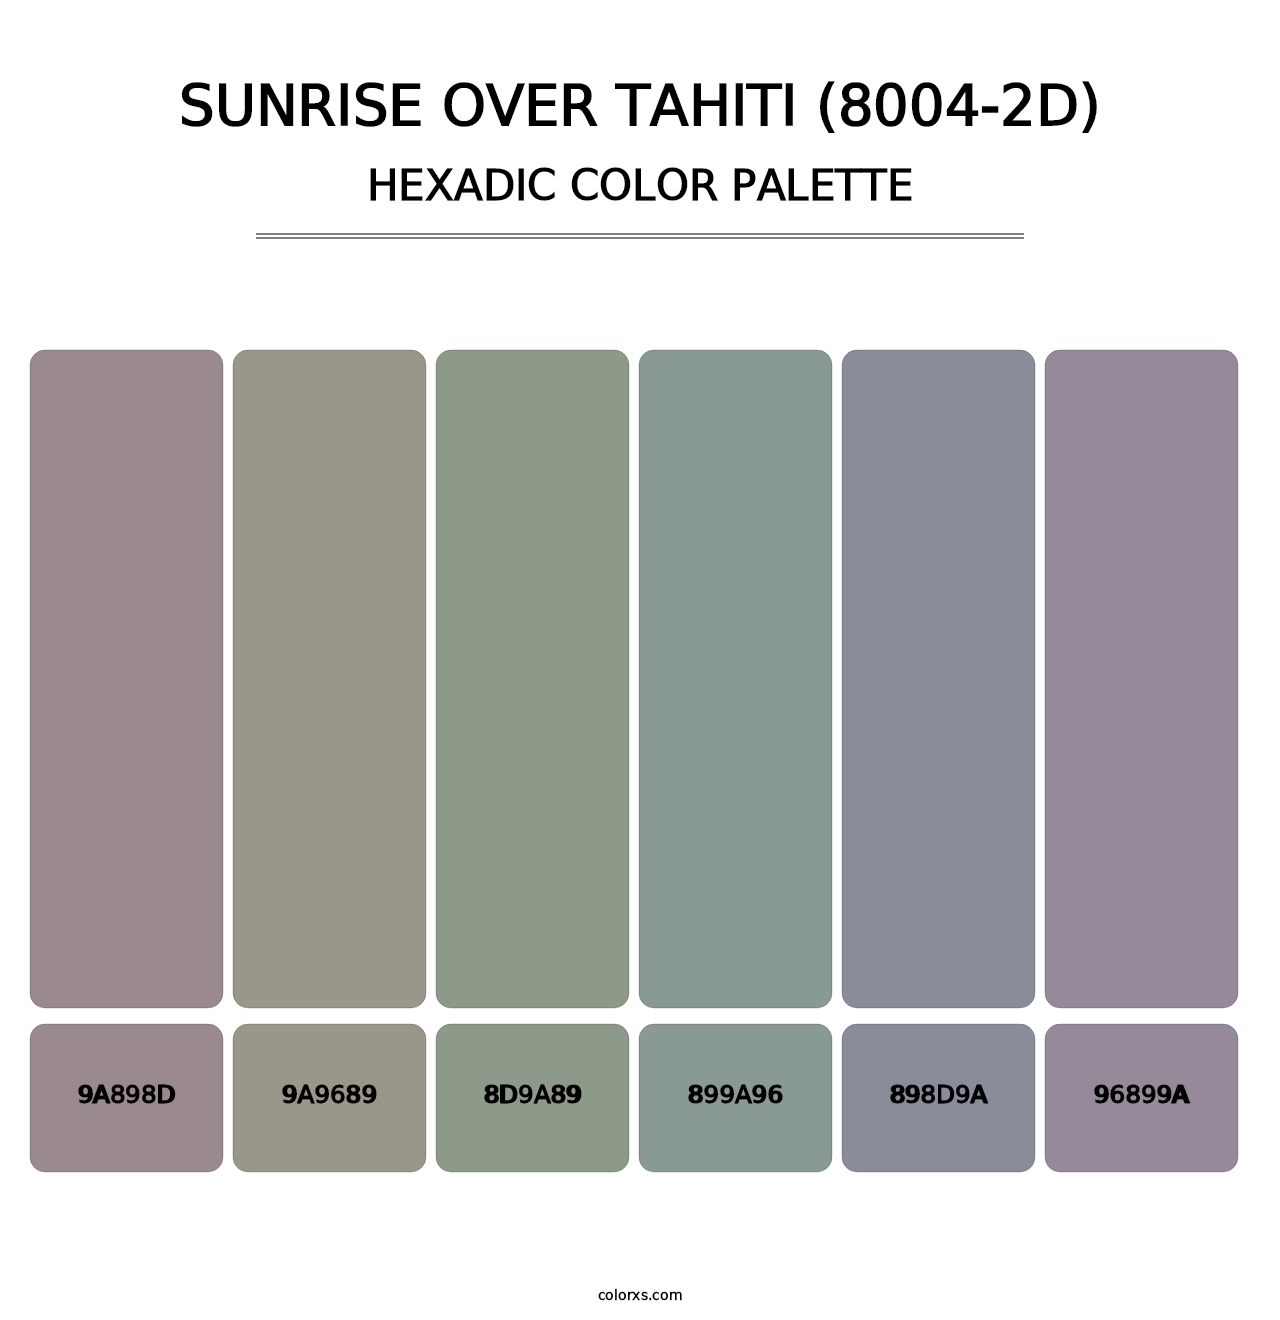 Sunrise Over Tahiti (8004-2D) - Hexadic Color Palette